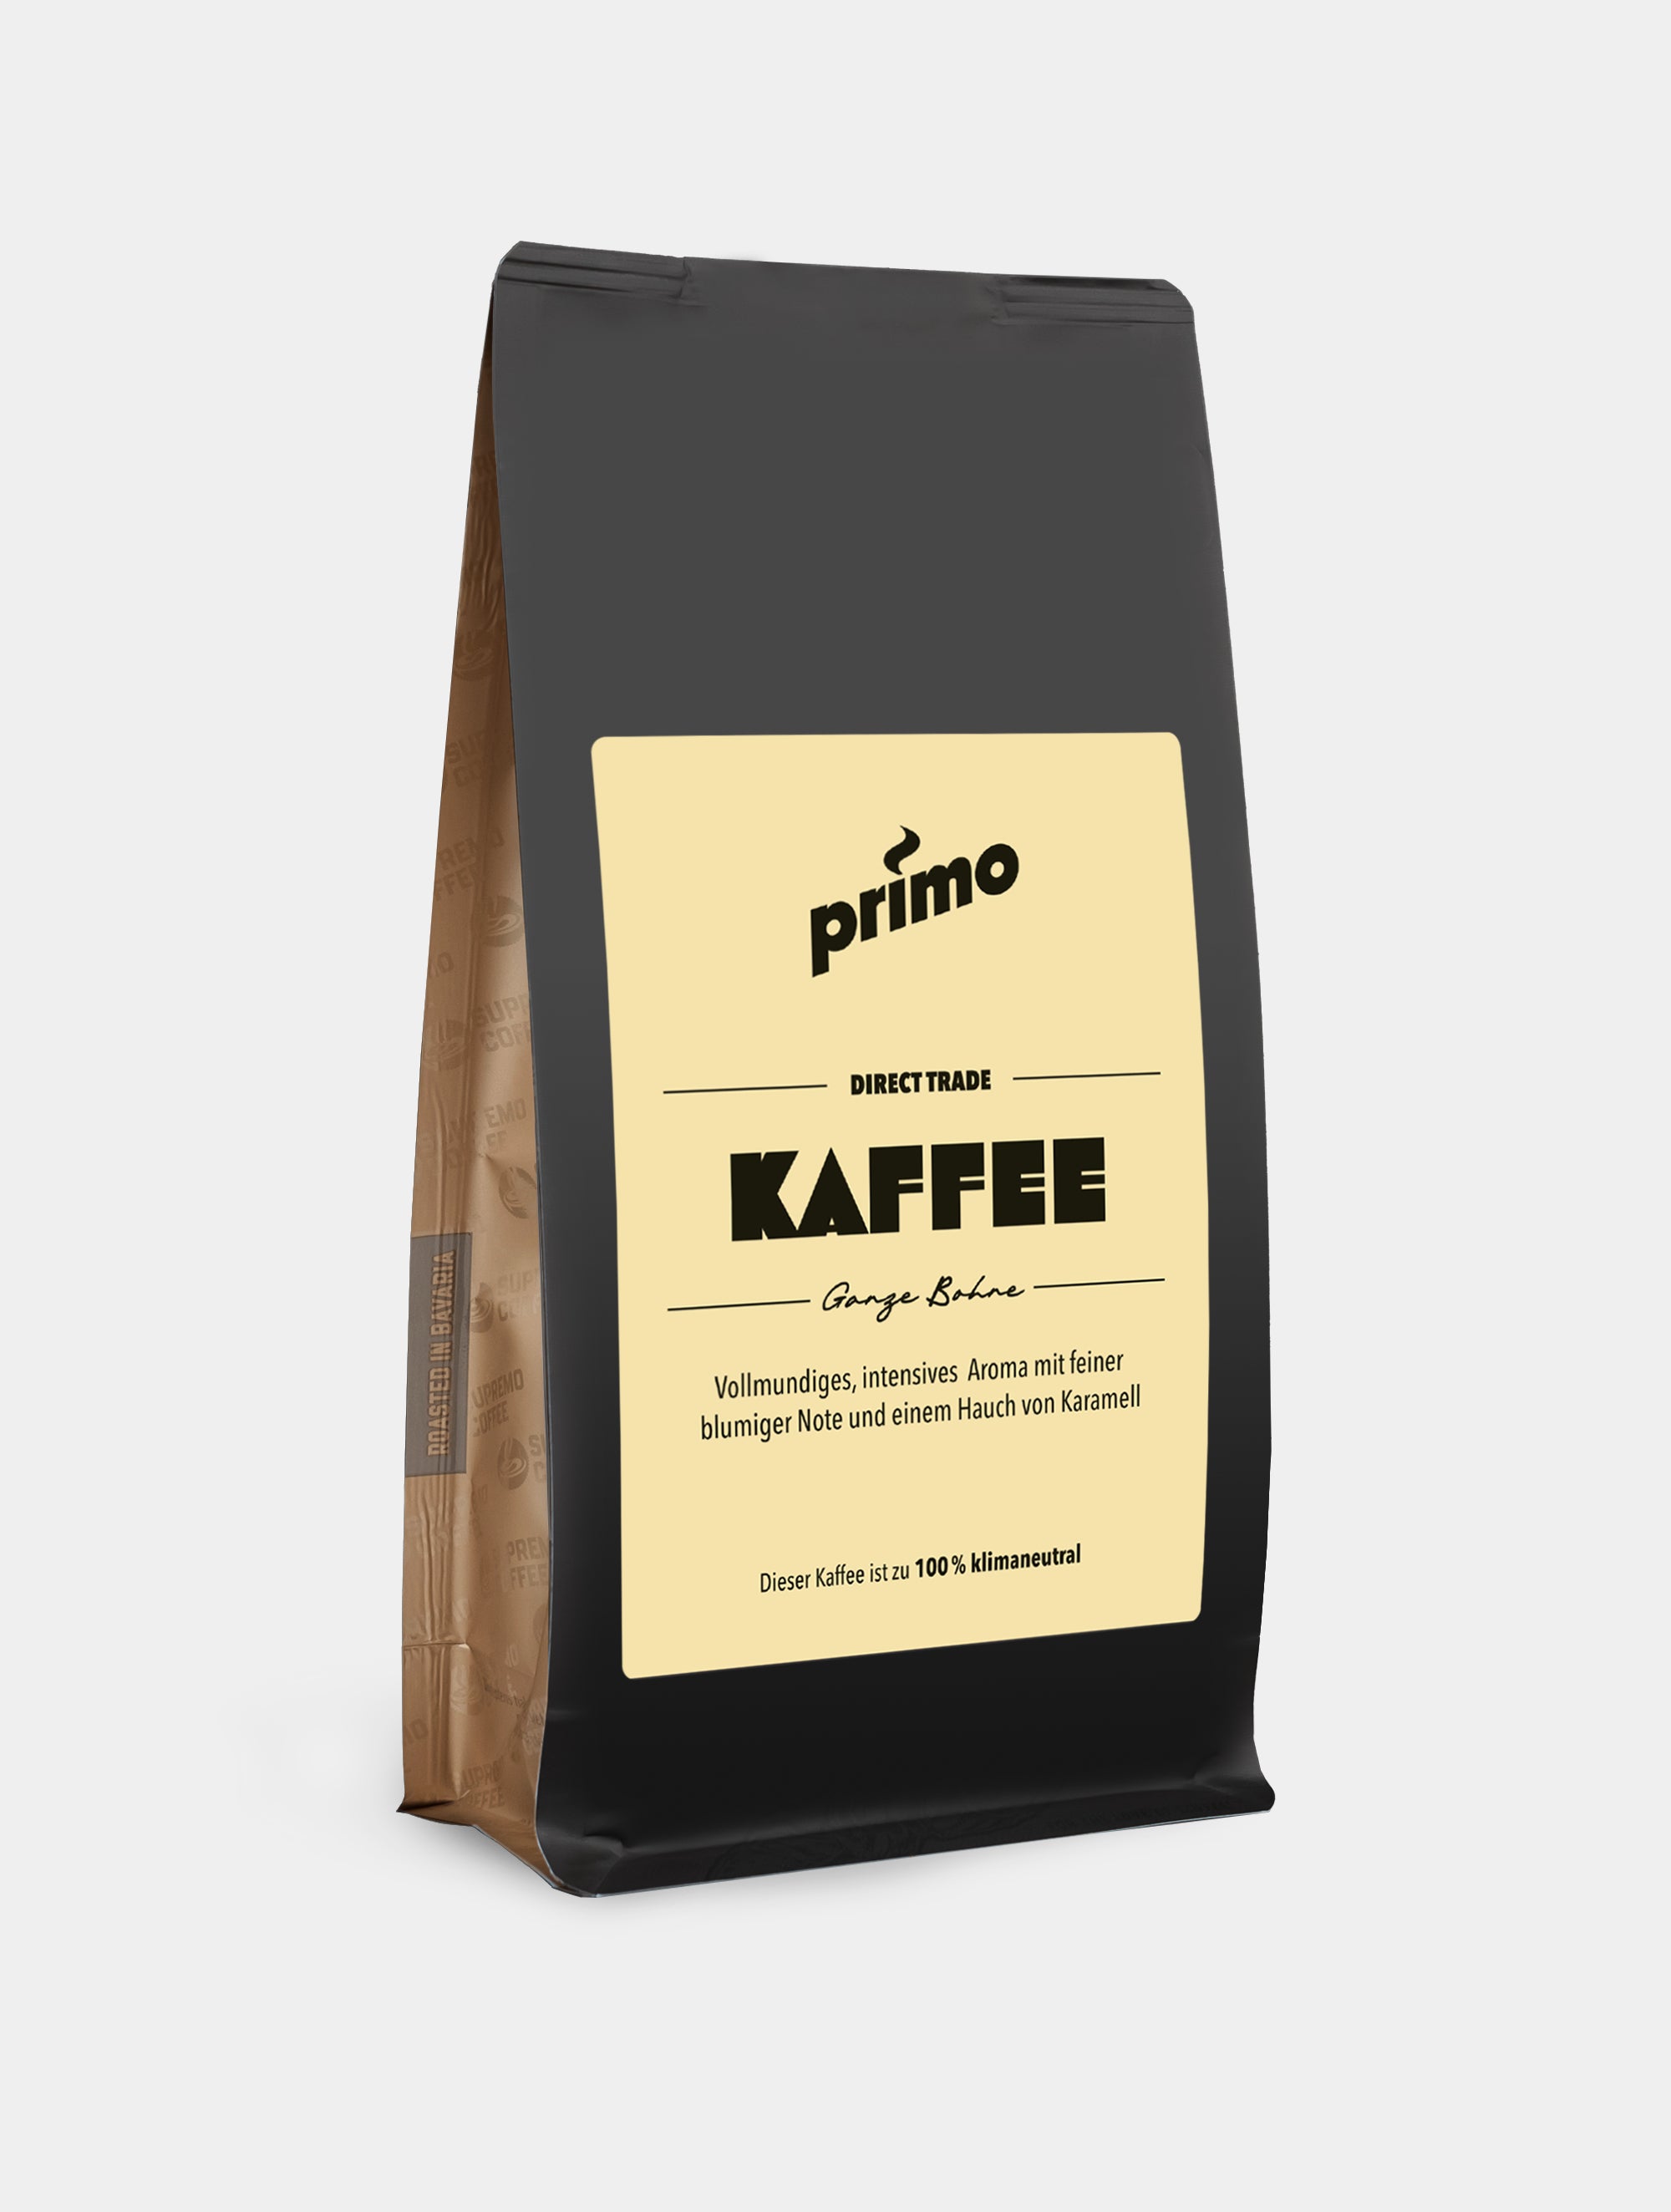 PRIMO Kaffee: Produktbild schräg